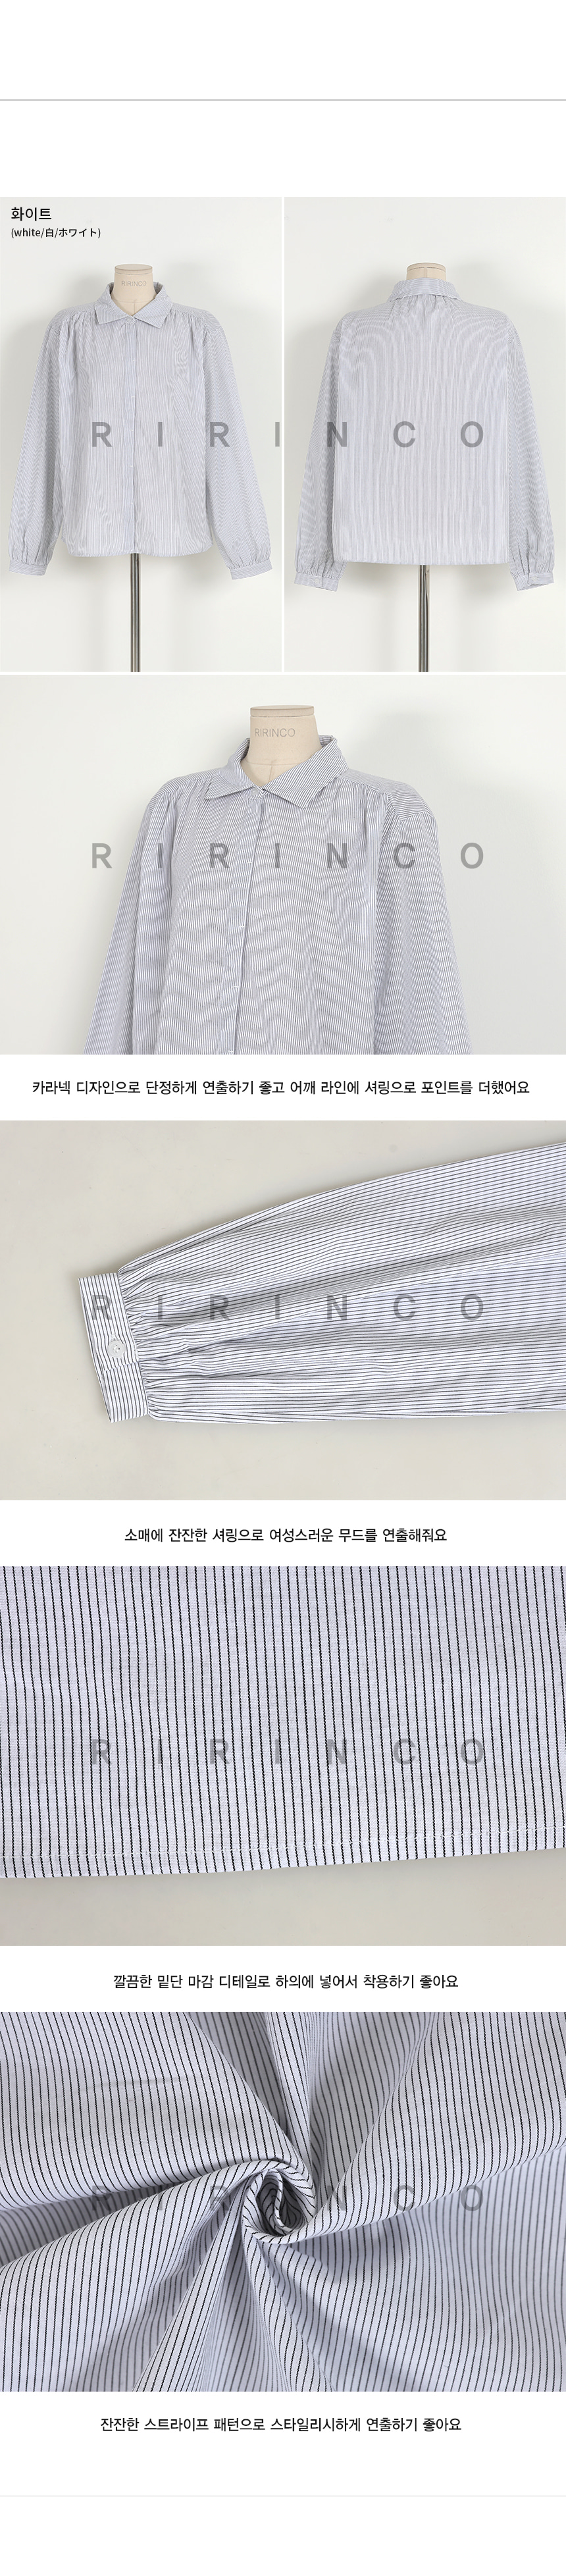 RIRINCO ストライプ柄レギュラーカラーシャツ